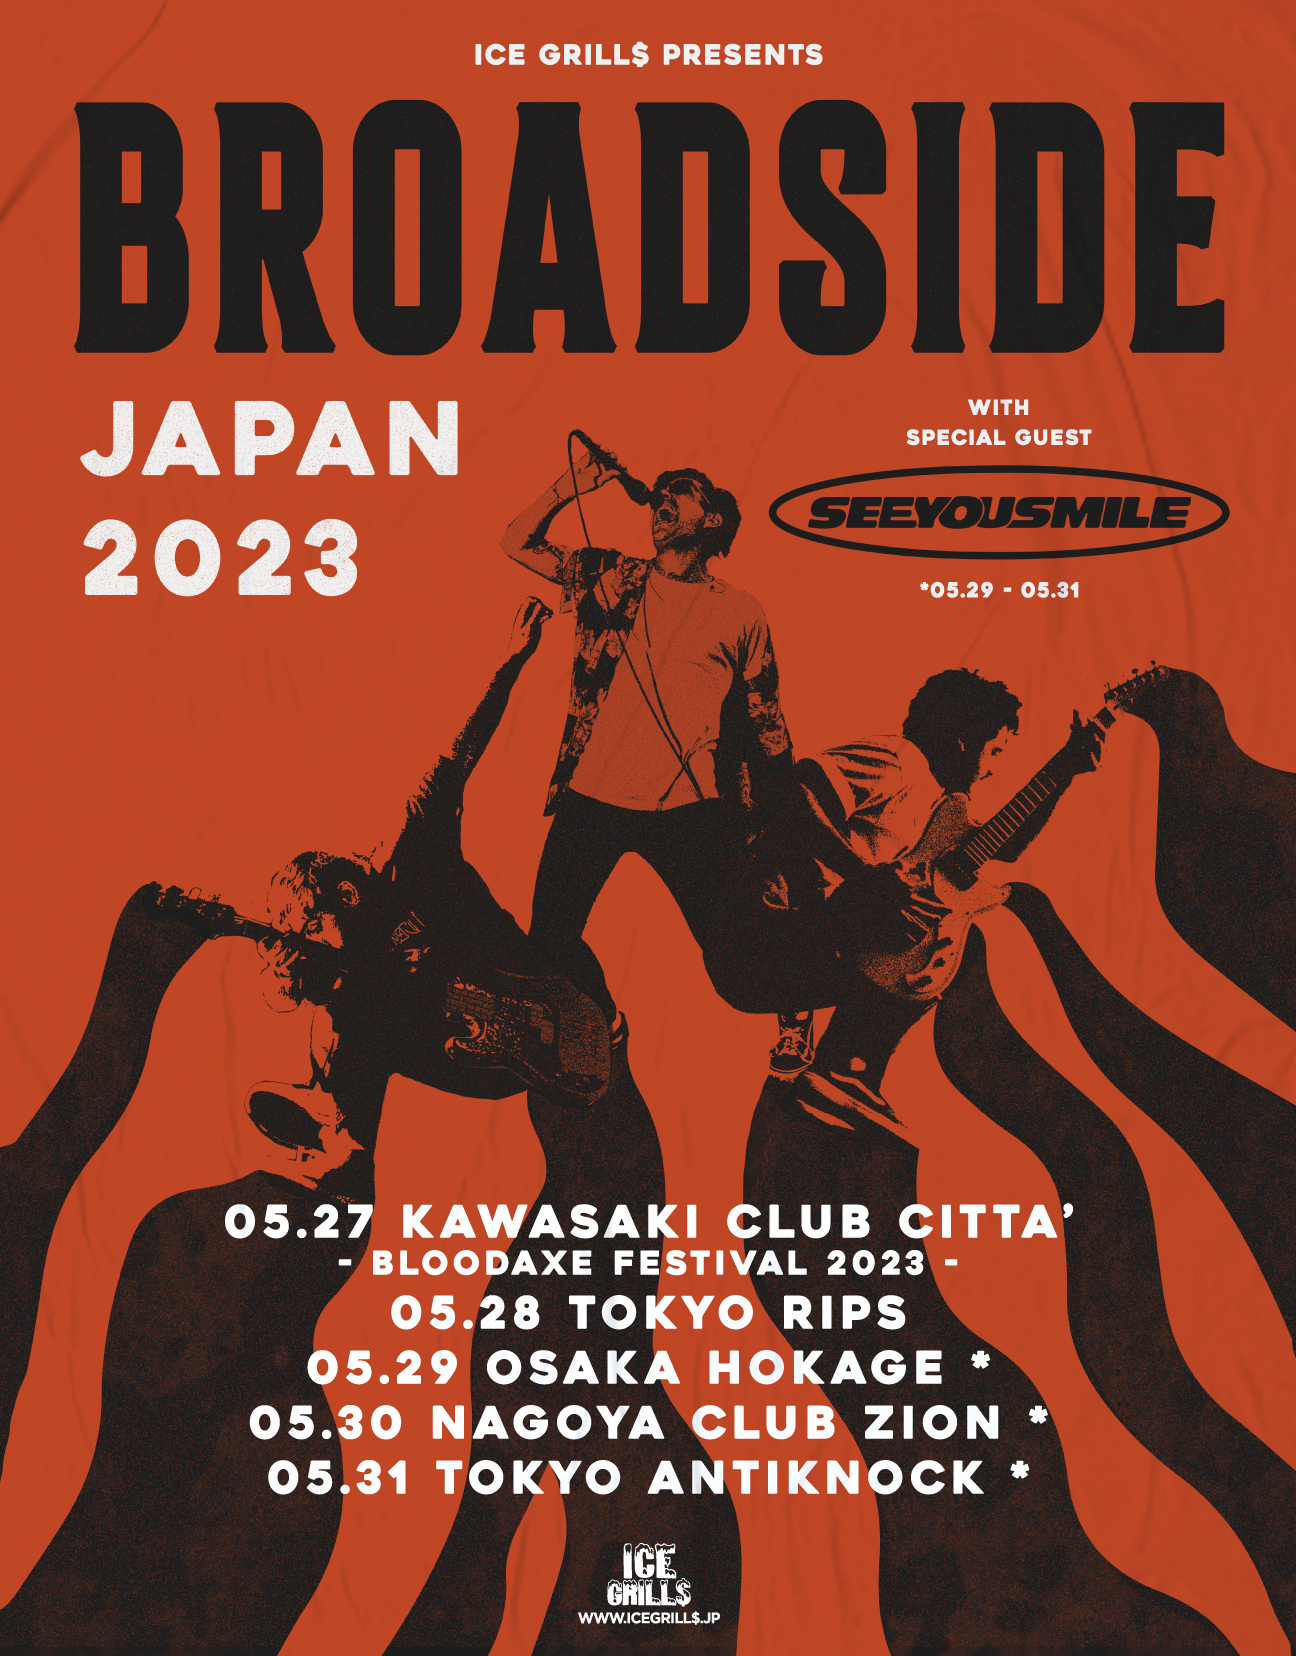 Broadside – Headline Tour announced